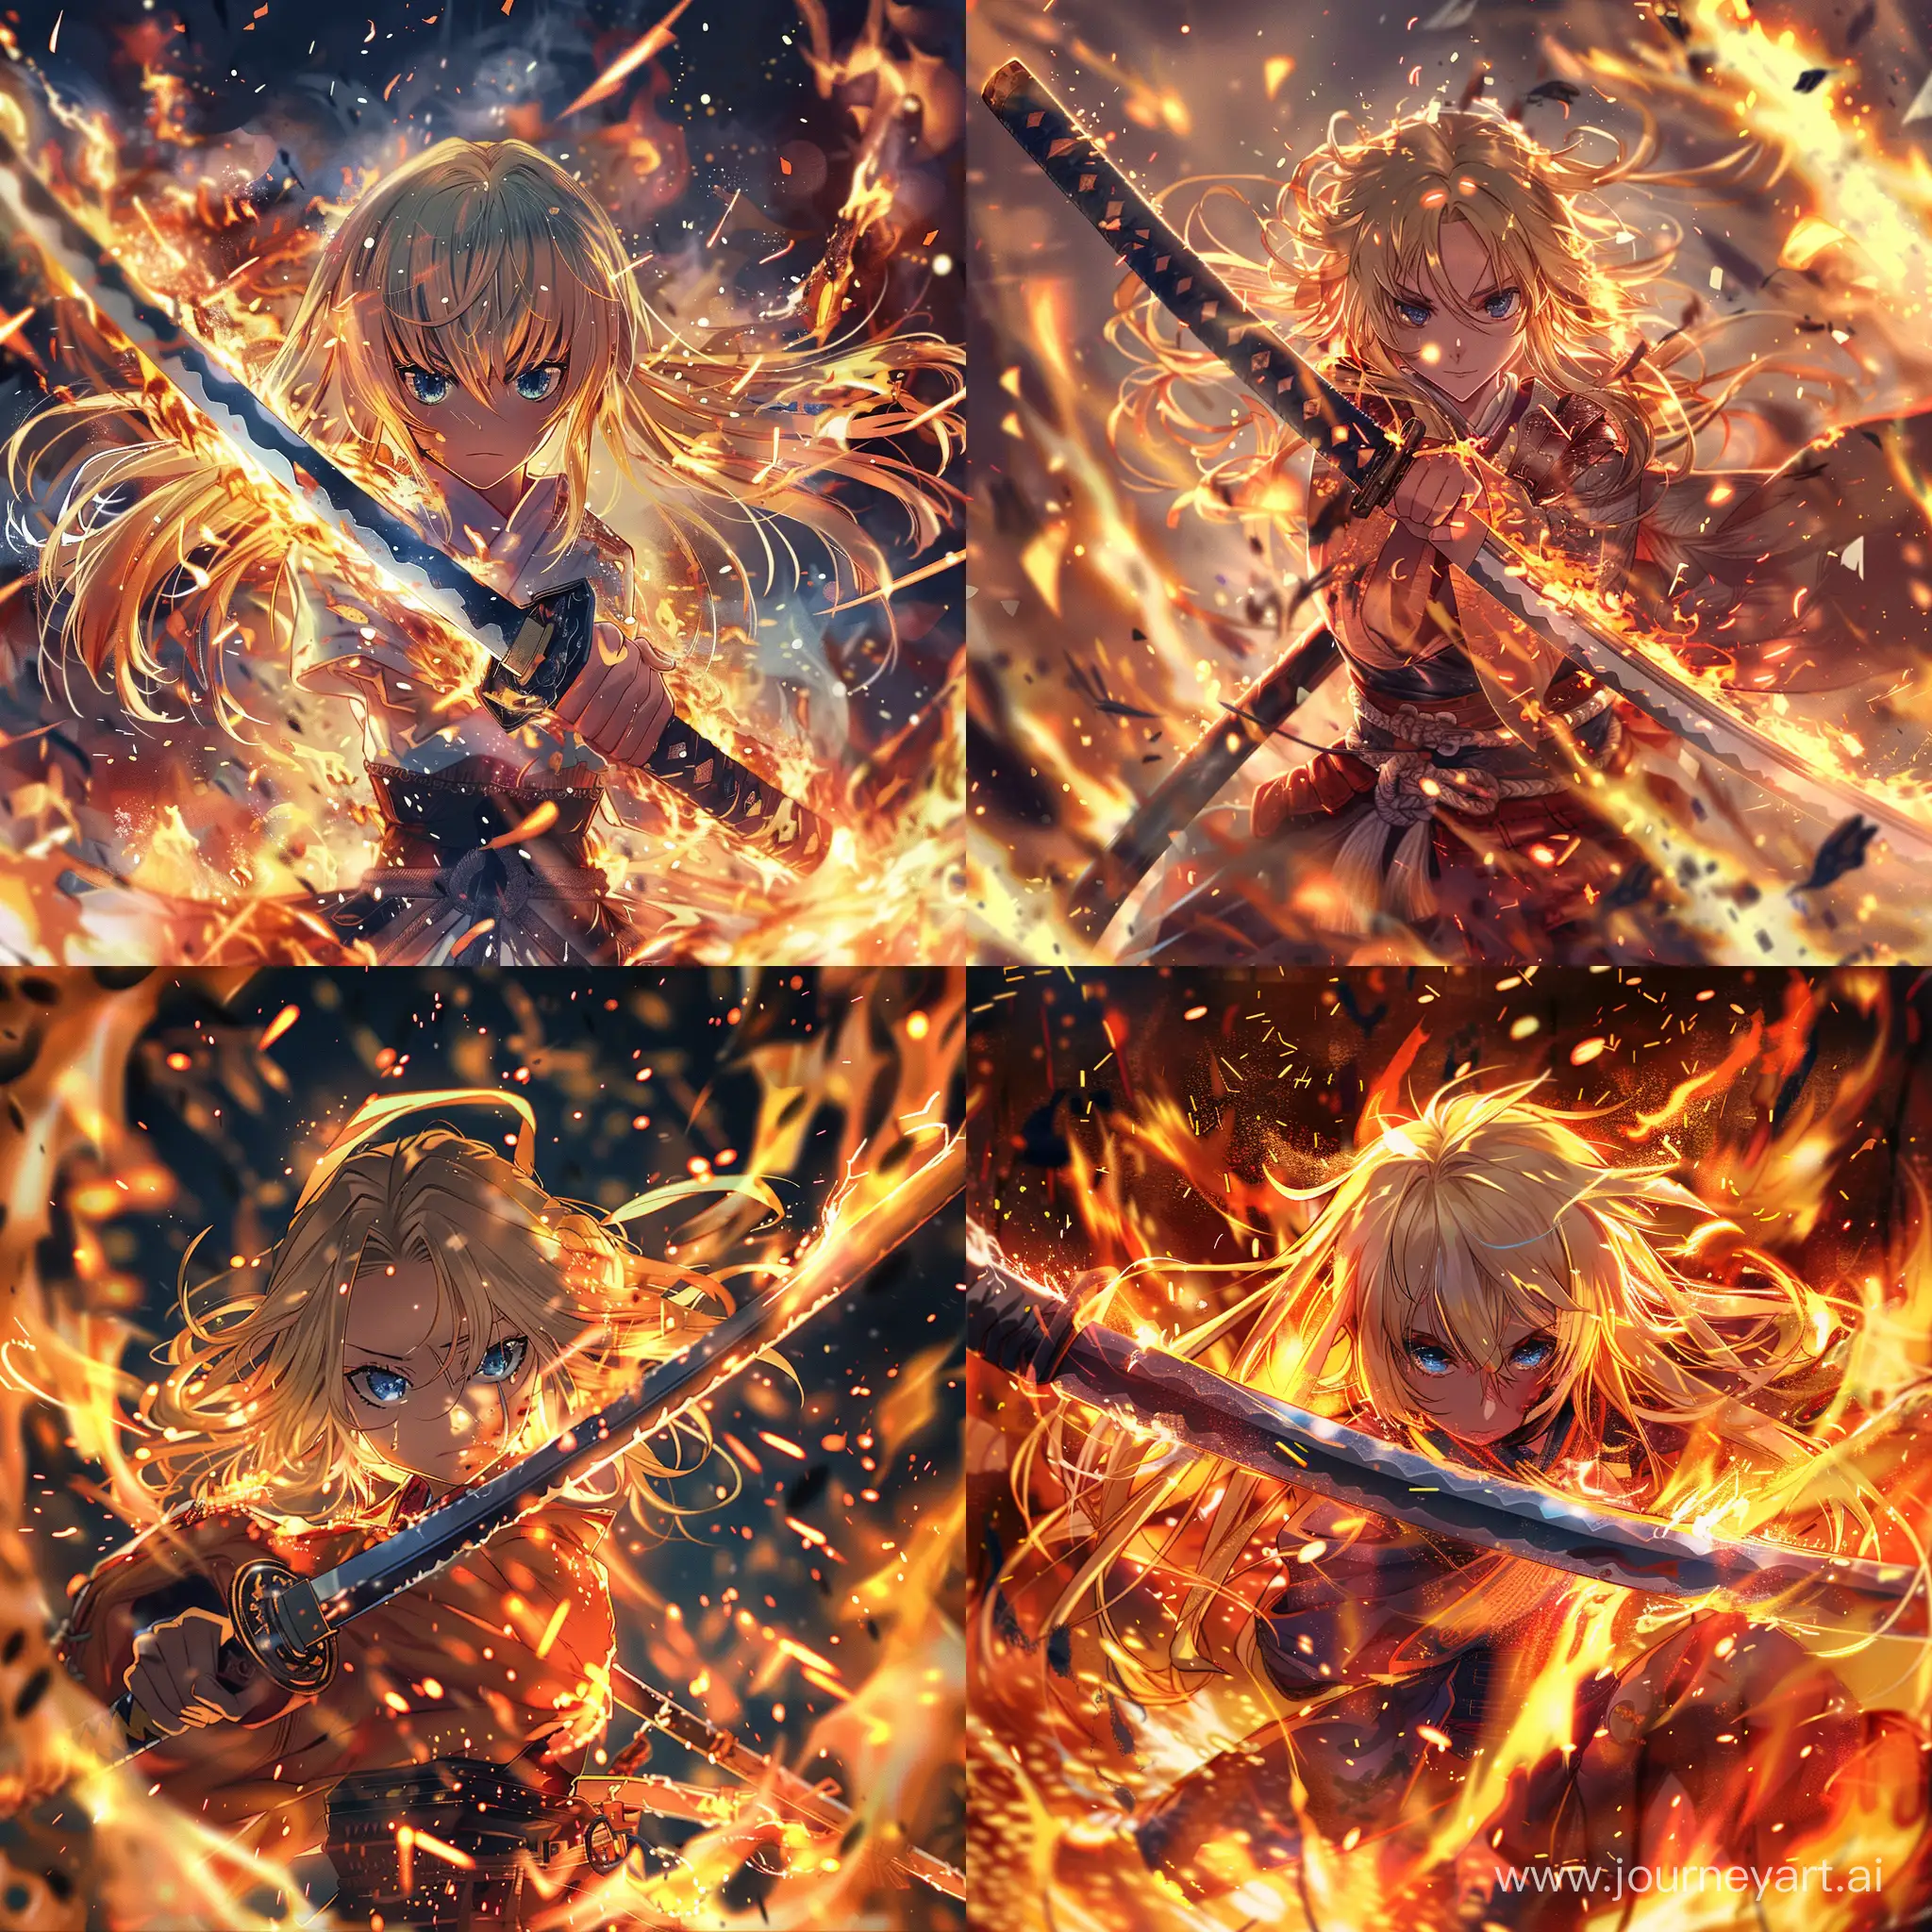 Blonde-Anime-Girl-Embracing-Flaming-Katana-Detailed-Avatar-Art